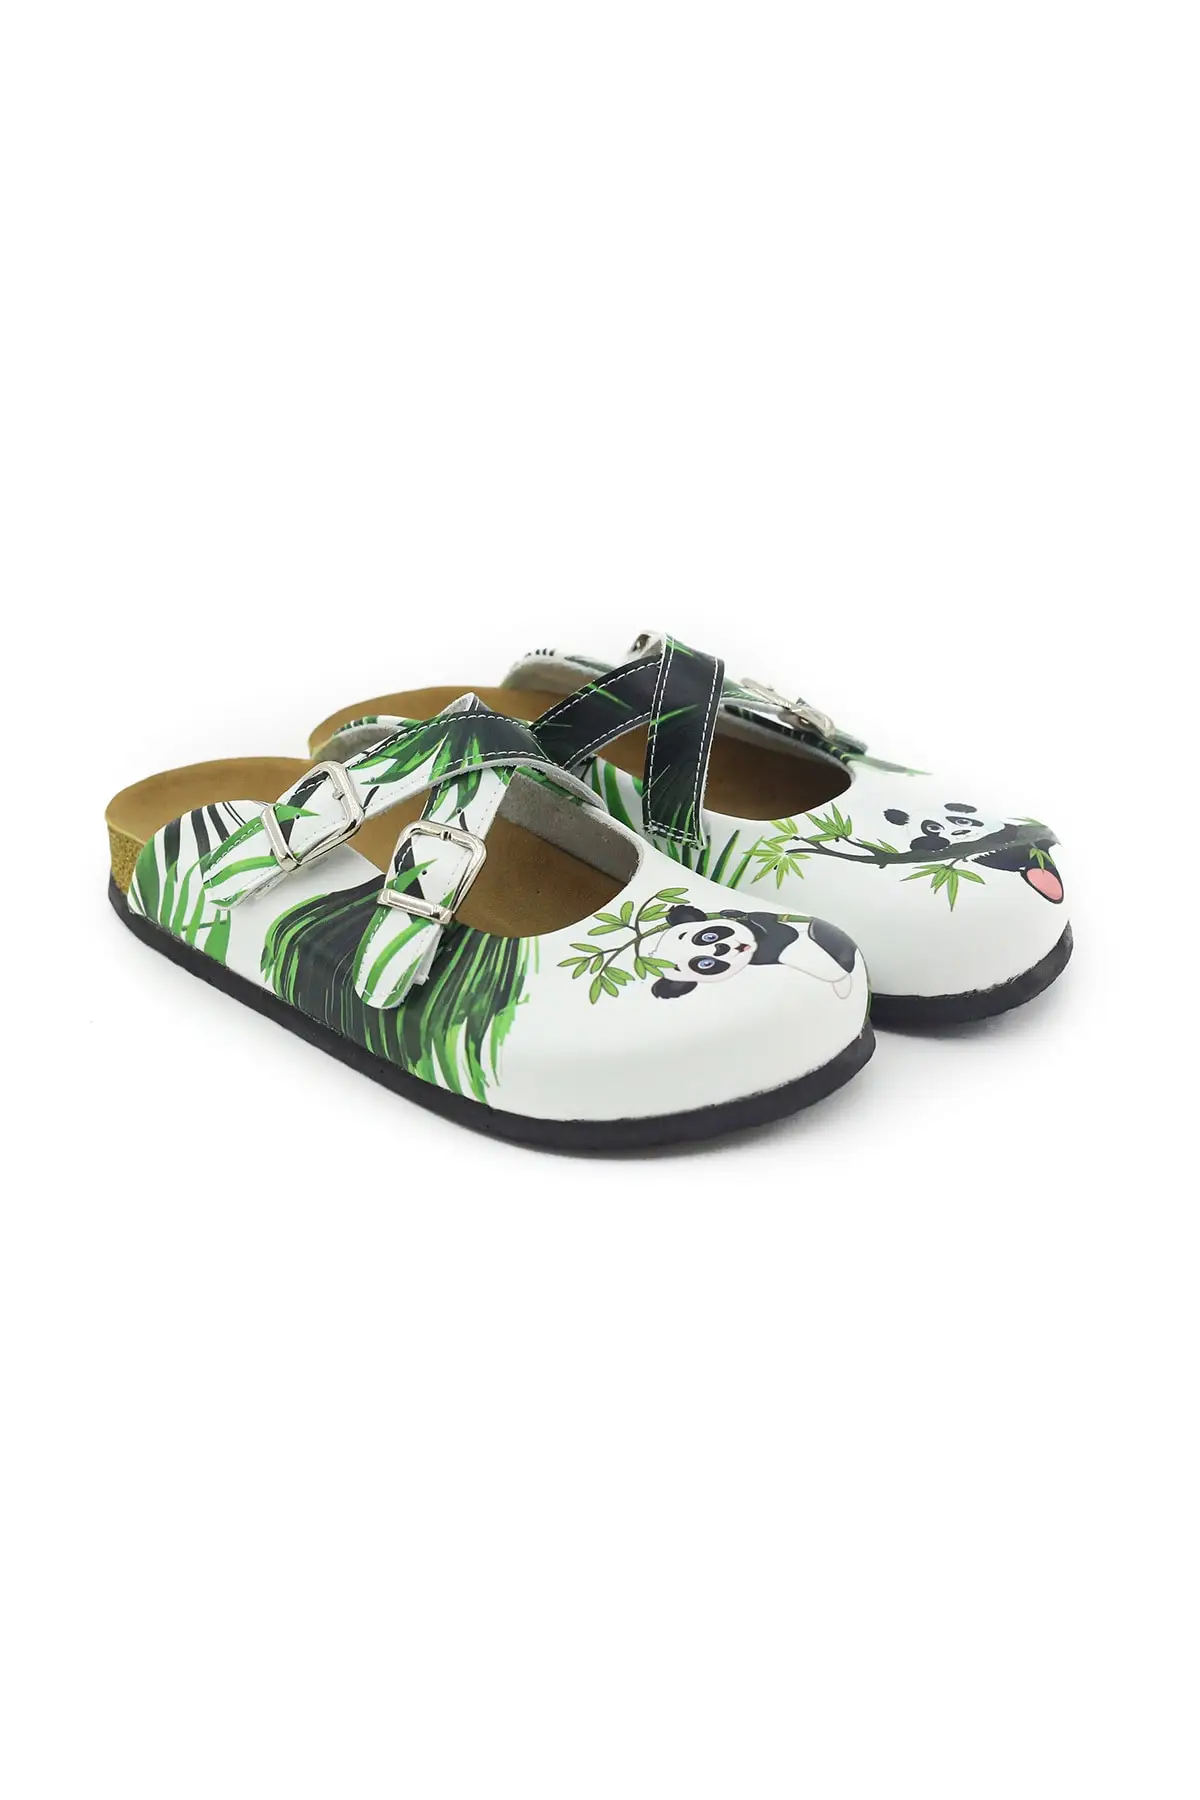 

Women Sandals Panda Patterned Zigzag Sabo Summer Indoor Outdoor Flip Flops Beach Shoe Female Slippers Platform Casual